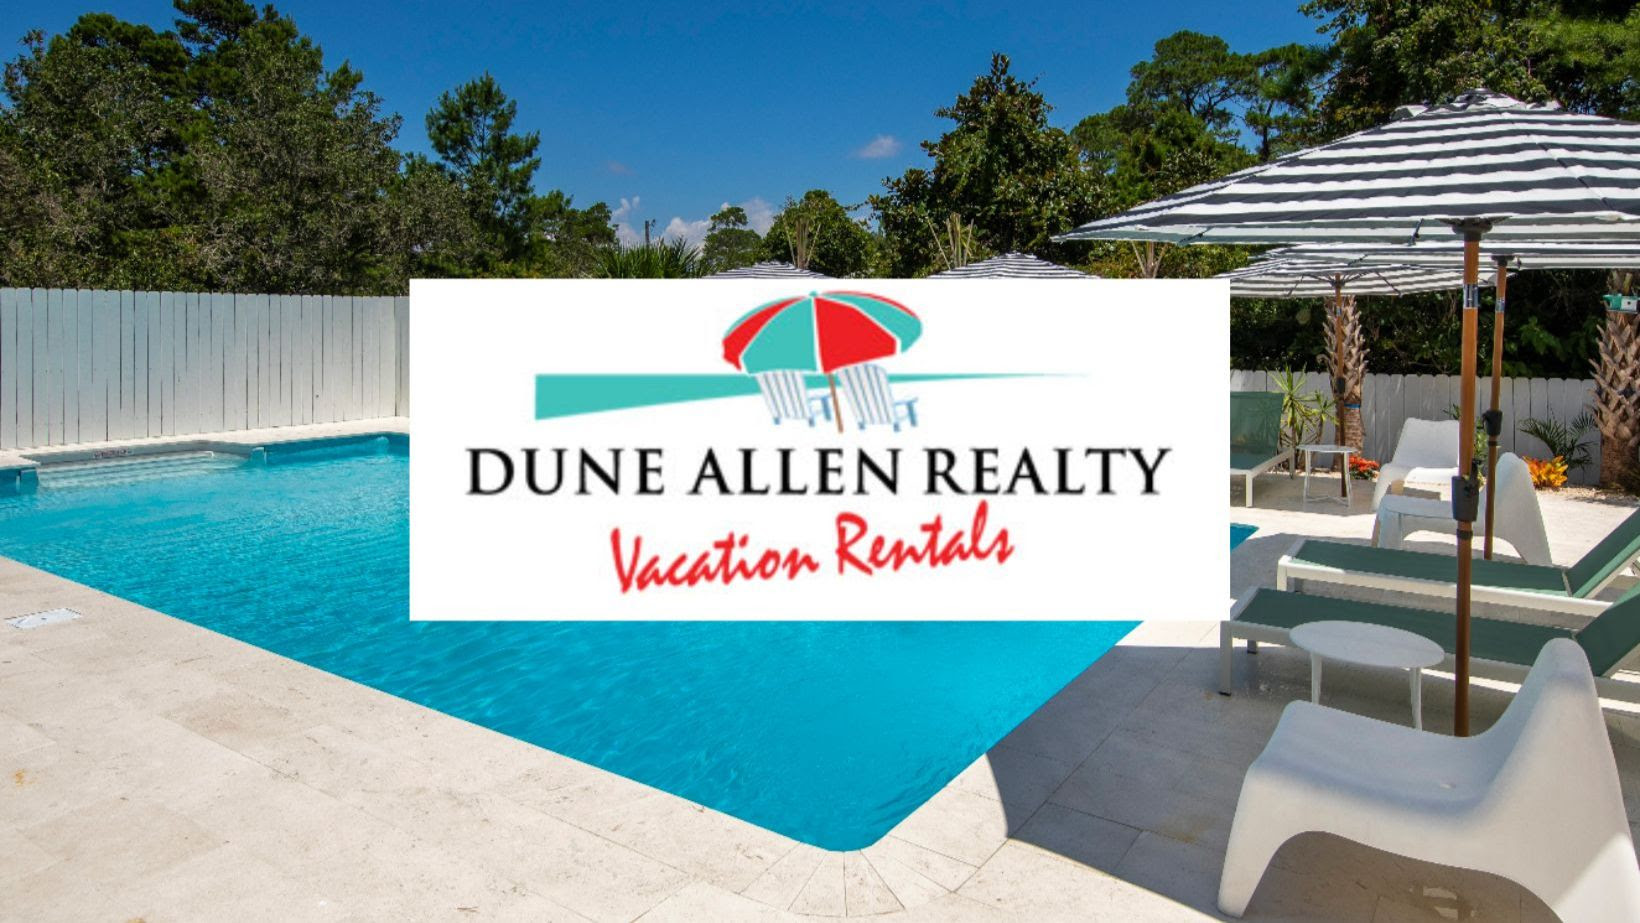 One of Dune Allen Realty's vacation rental pools